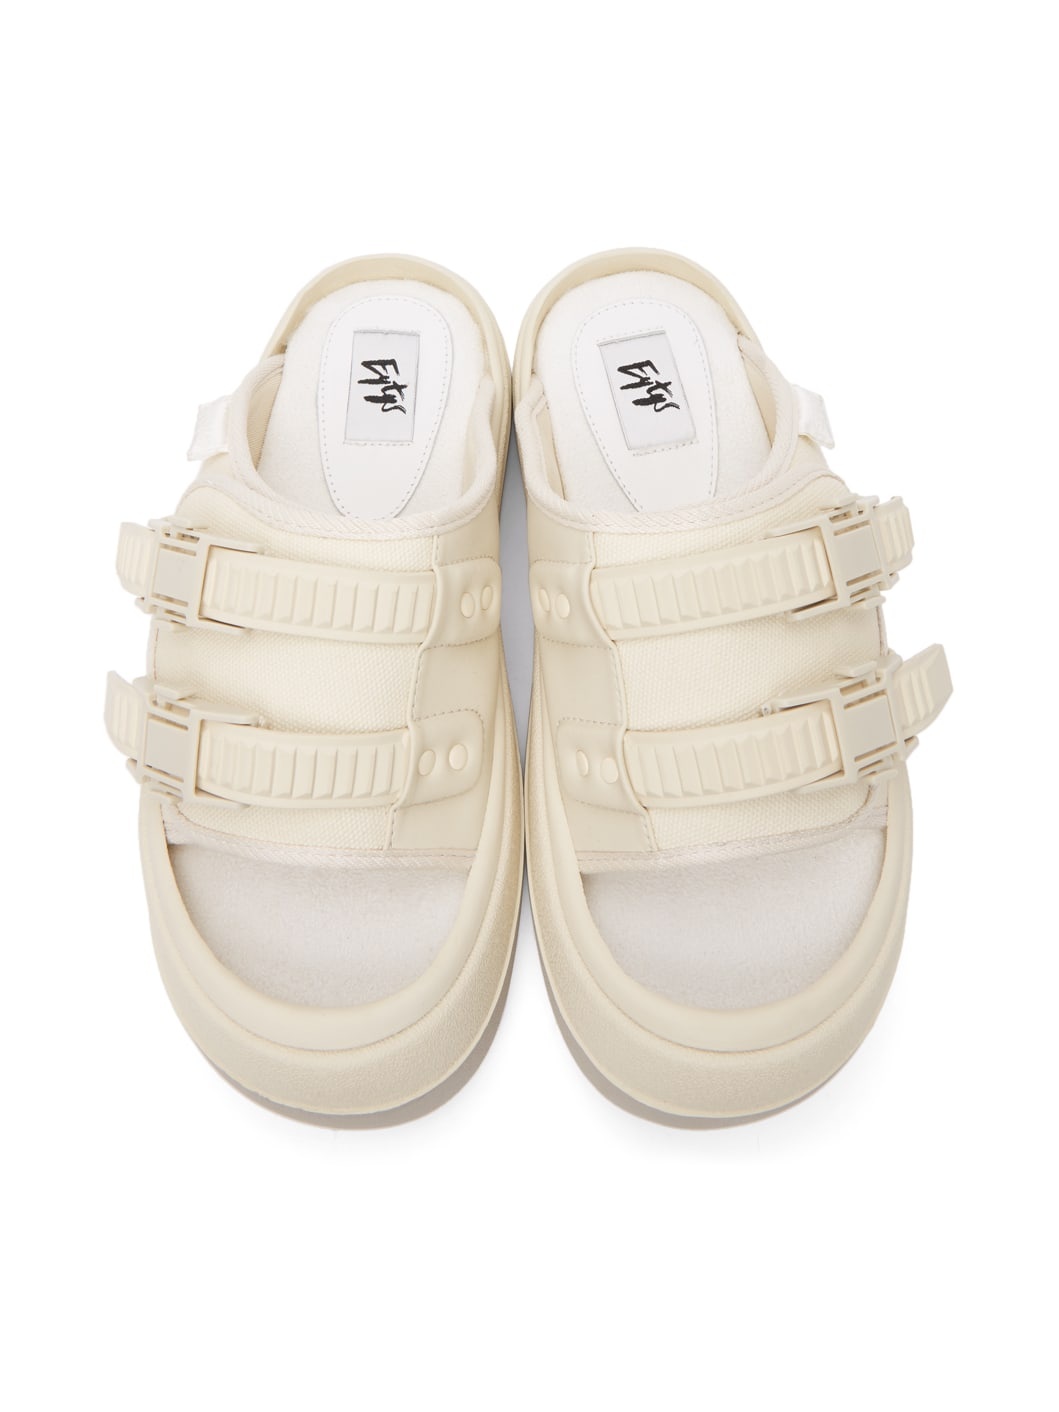 SSENSE Exclusive Off-White Capri Sandals - 5